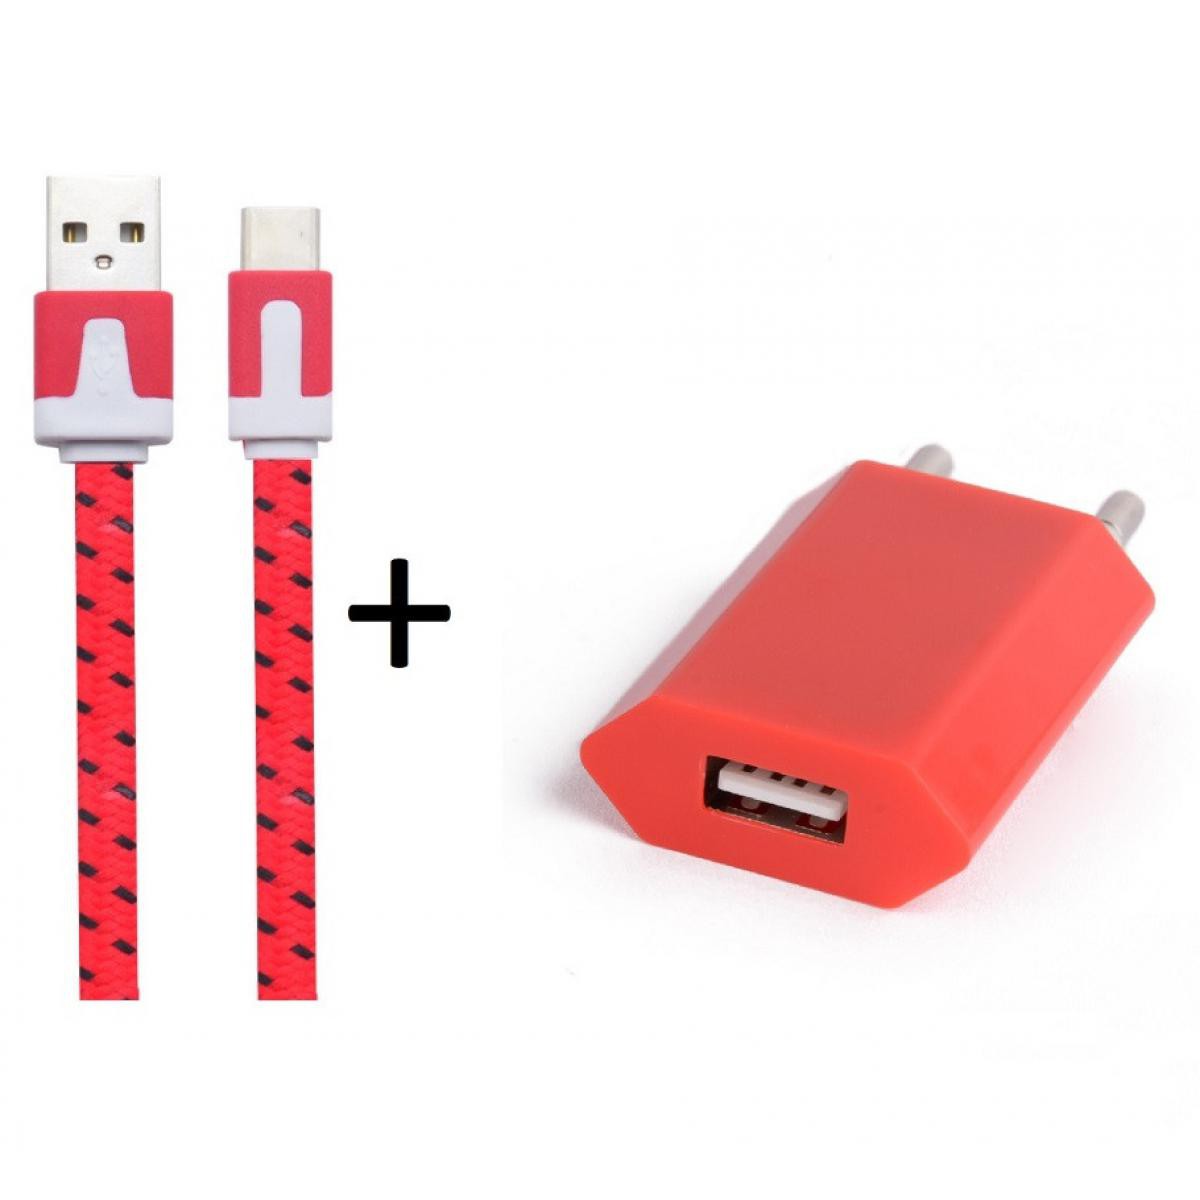 Shot - Pack Chargeur pour HUAWEI Mate 20 Smartphone Type C (Cable Noodle 1m Chargeur + Prise Secteur USB) Murale Android (ROUGE) - Chargeur secteur téléphone